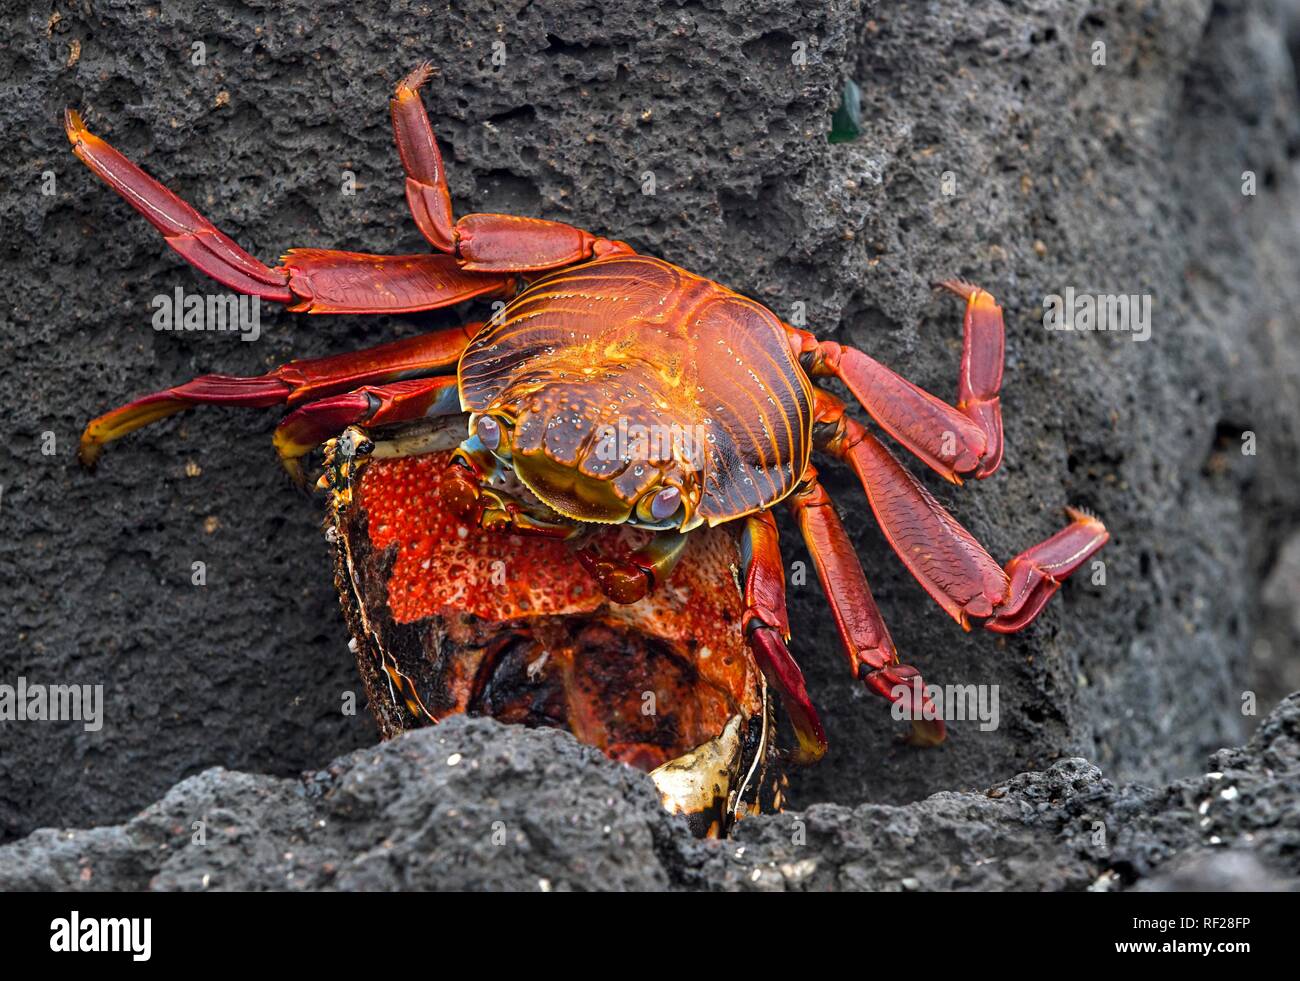 Red Rock Crab (Grapsus grapsus) versorgt einen Hummer, Insel Floreana, Galapagos, Ecuador Stockfoto